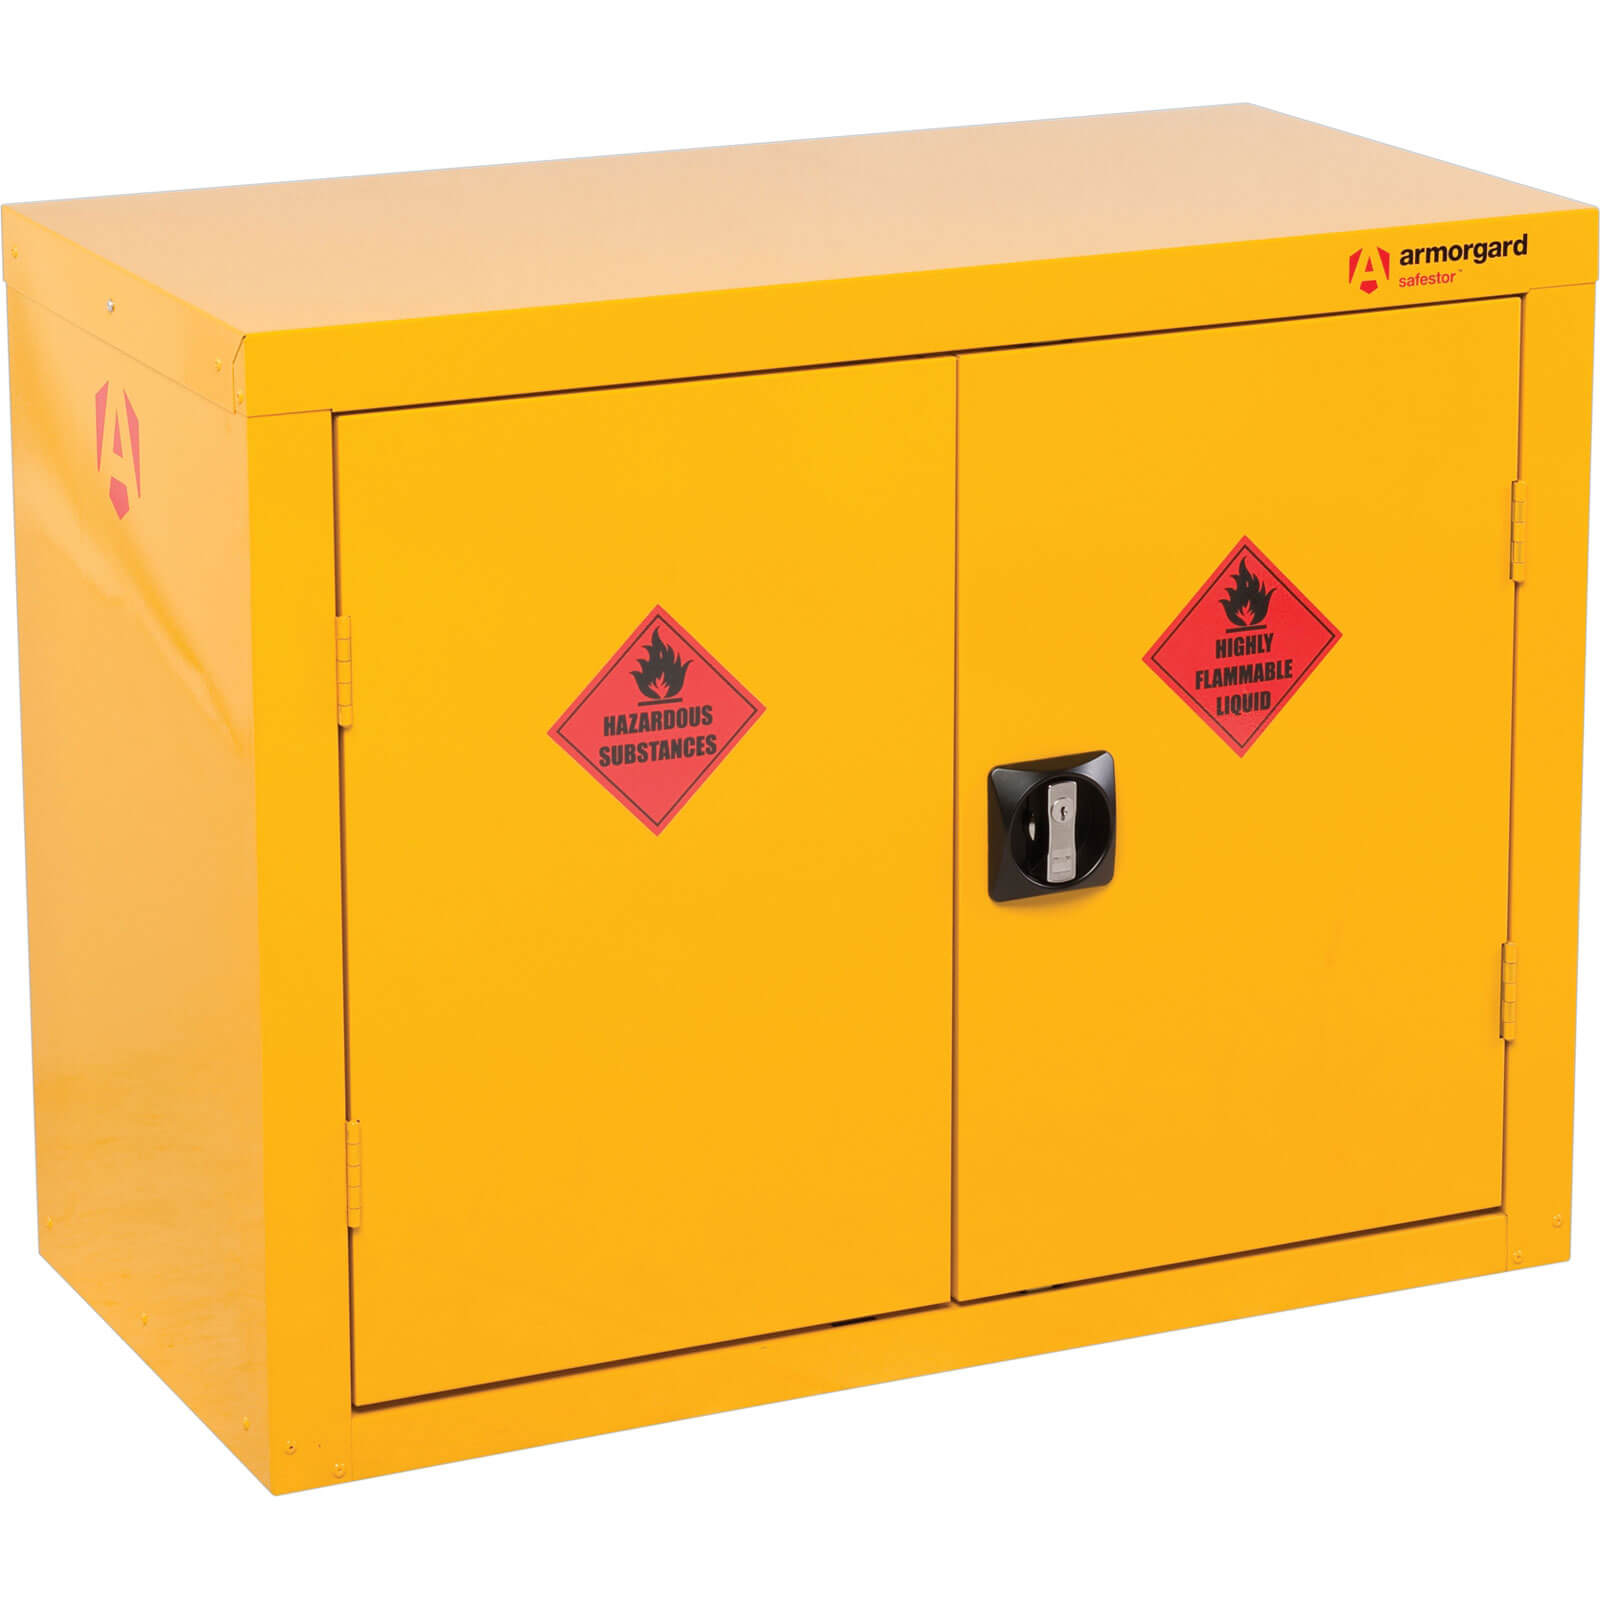 Image of Armorgard Safestor Hazardous Materials Secure Storage Cabinet 900mm 465mm 700mm